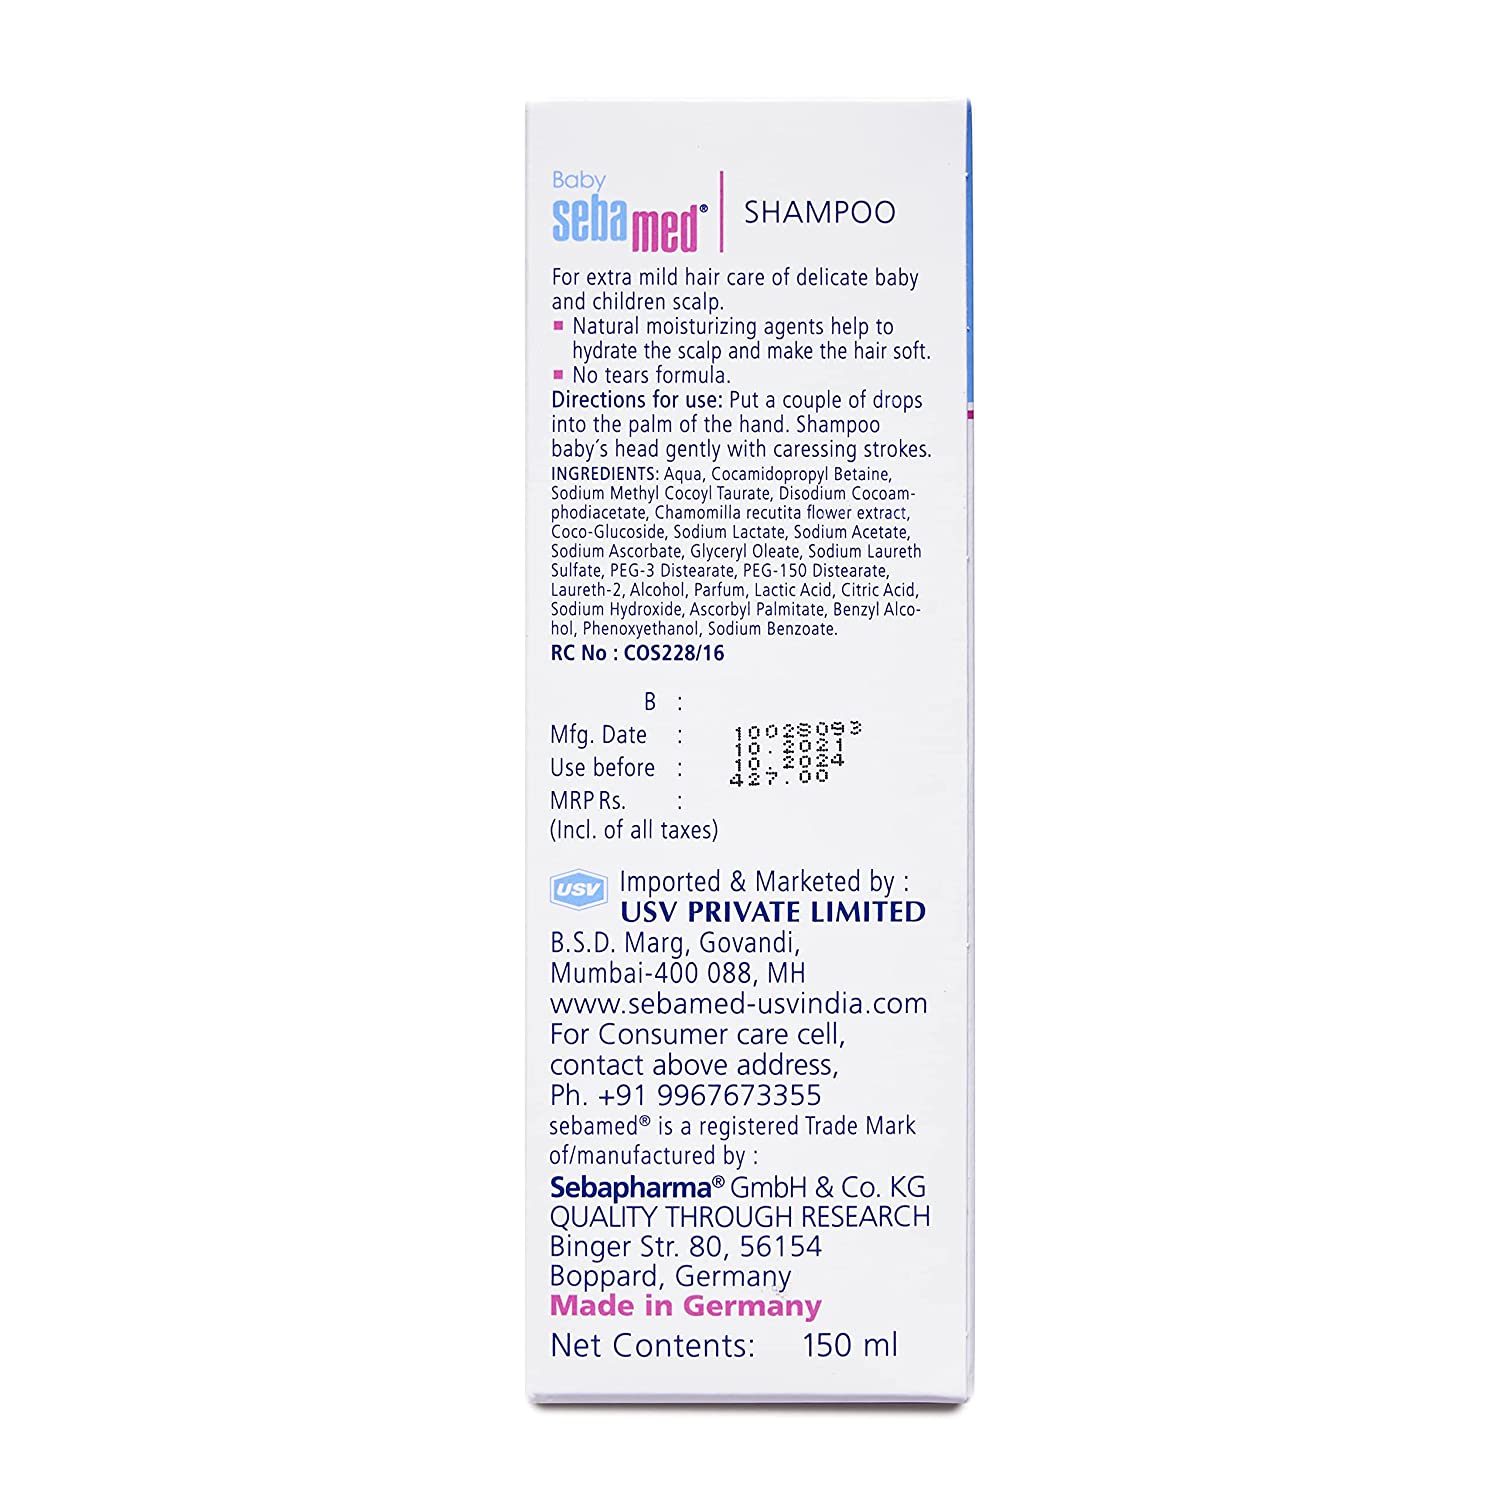 Sebamed Baby Shampoo 150ml|Ph 5.5| Camomile|Natural moisturisers|No tears formula|For delicate scalp